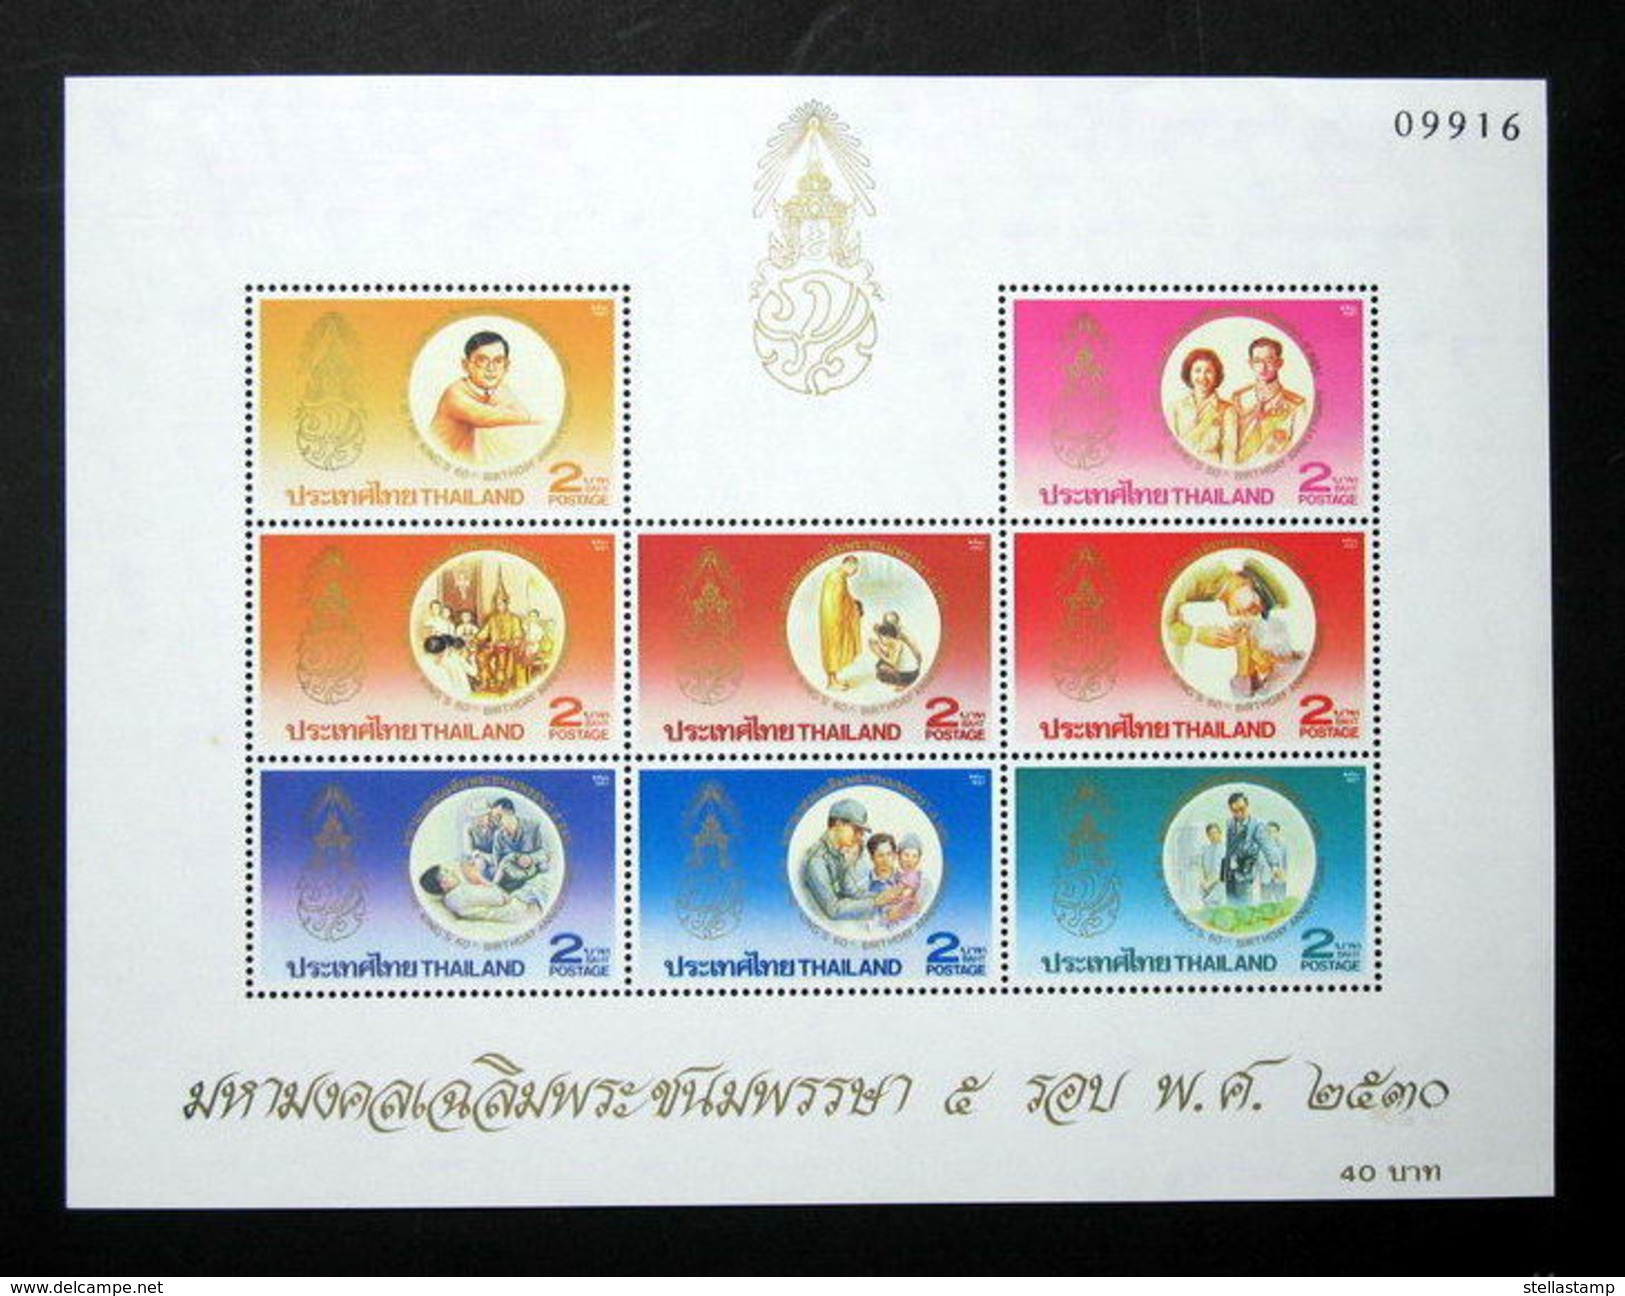 Thailand Stamp SS 1987 HM King 60th Birthday 2nd Series (OG MNH) - Thailand